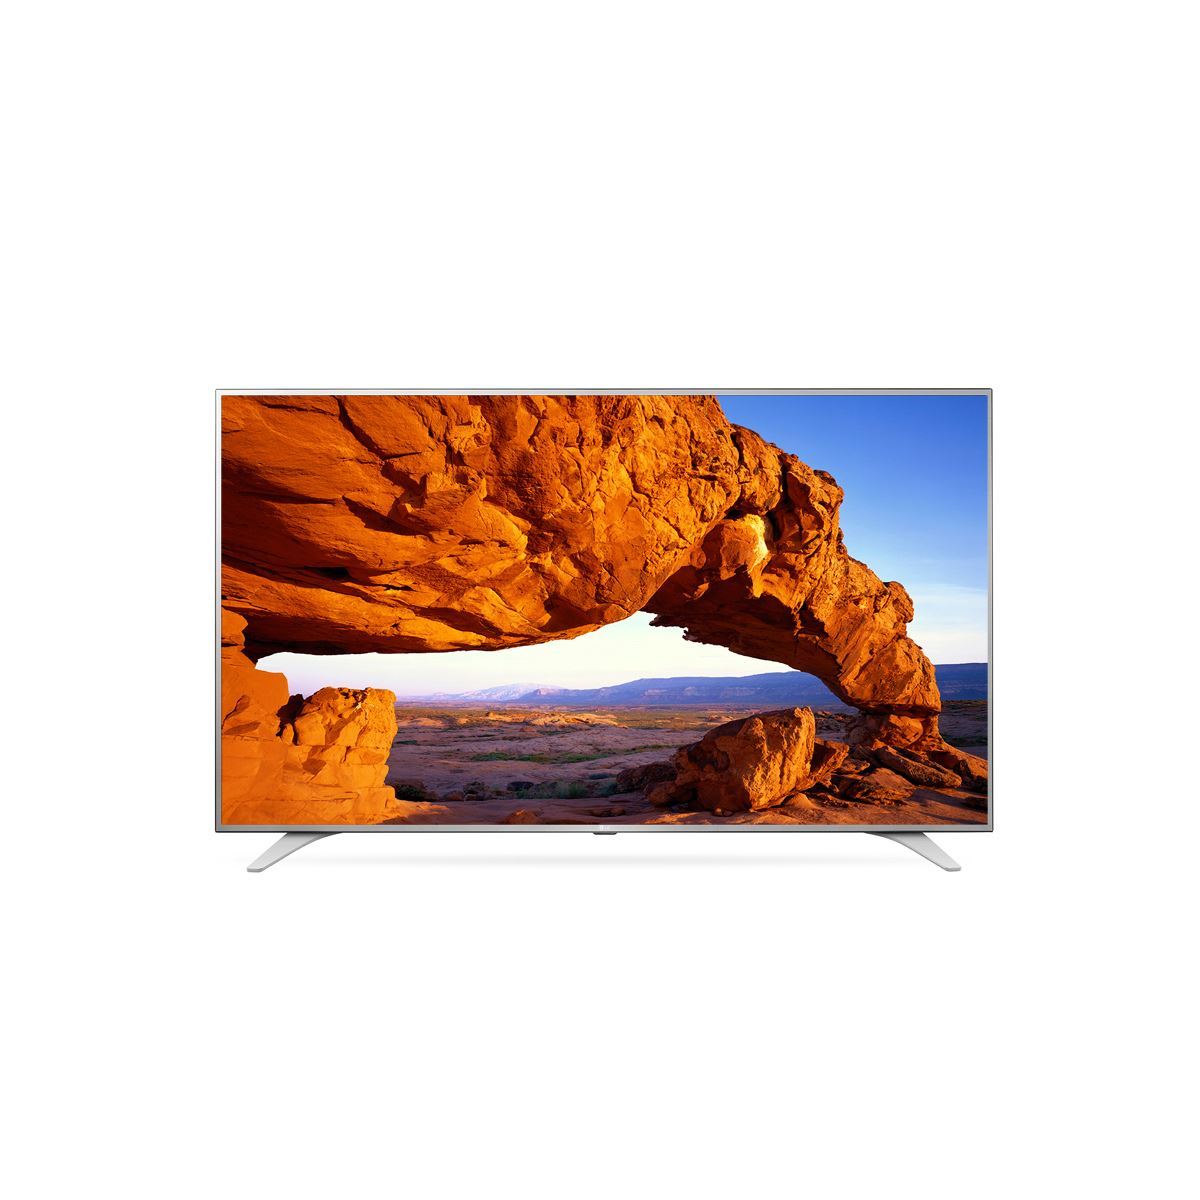 Pantalla LG 49” UHD Smart Tv WebOS Color Prime 49UH6500